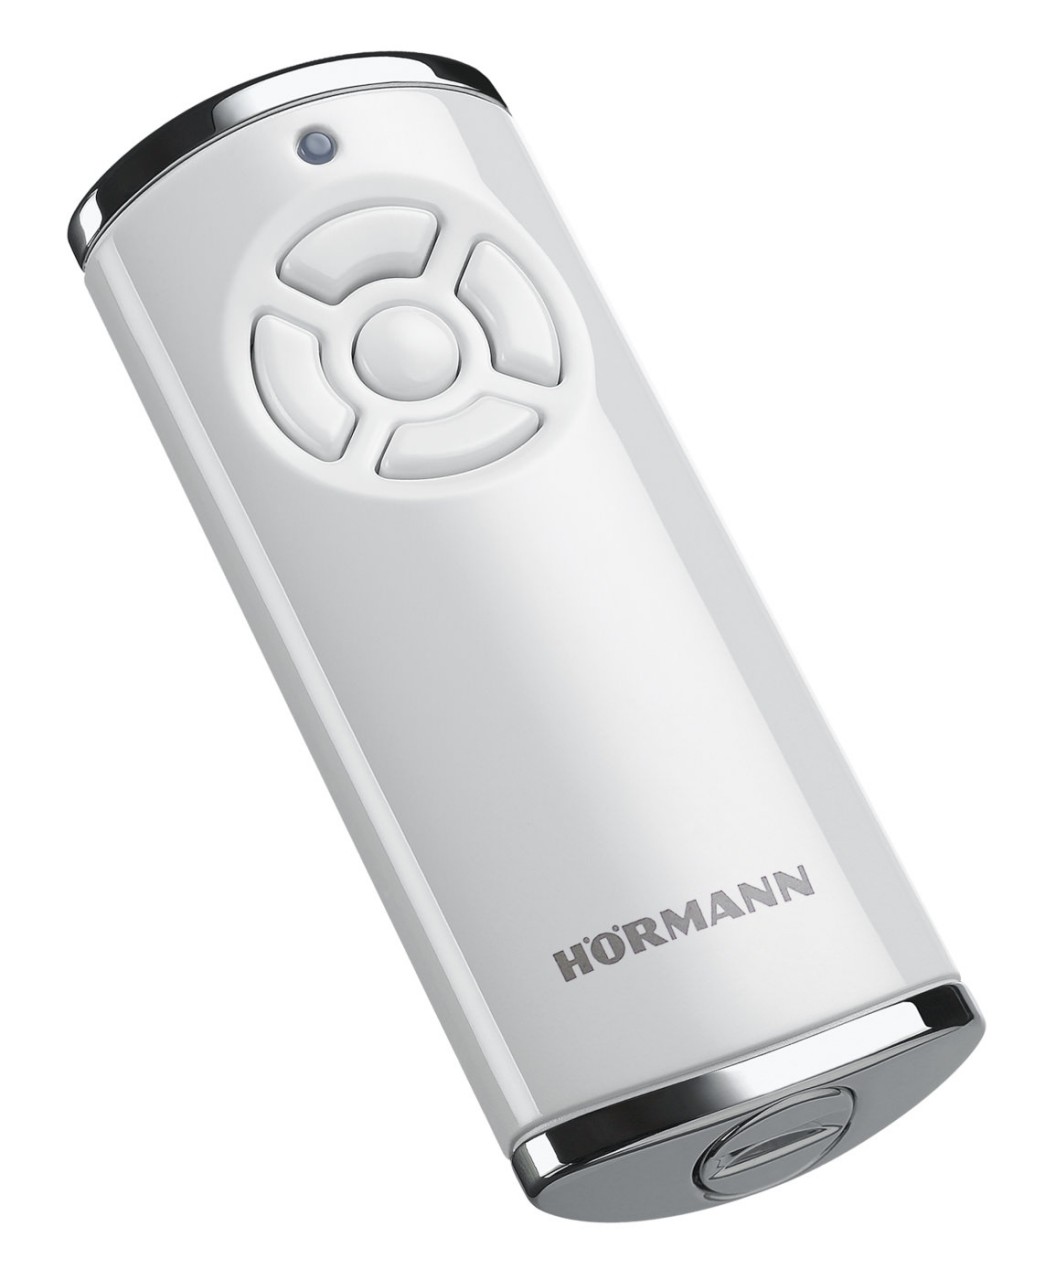 Hormann handset HS 5 BiSecur with 868 MHz in white